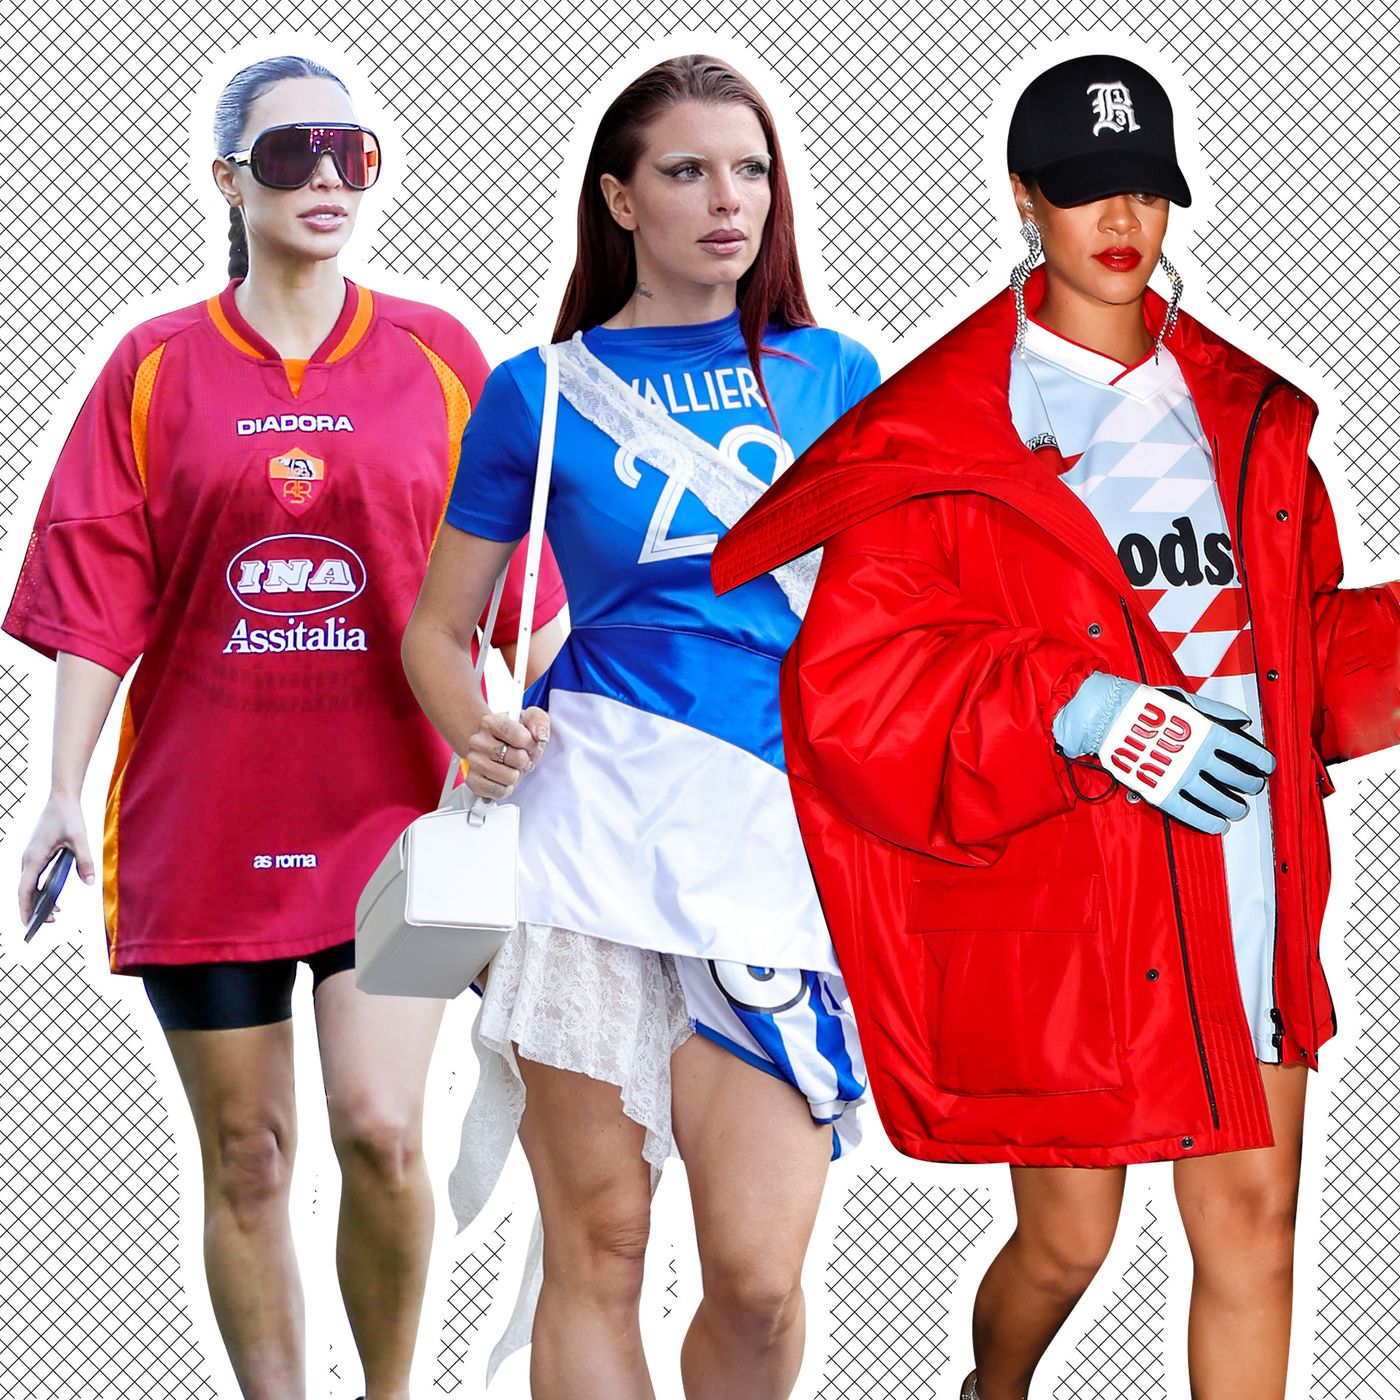 19 Stylish Ways to Wear a Sports Jersey  Sporty outfits, Rihanna style,  Fashion